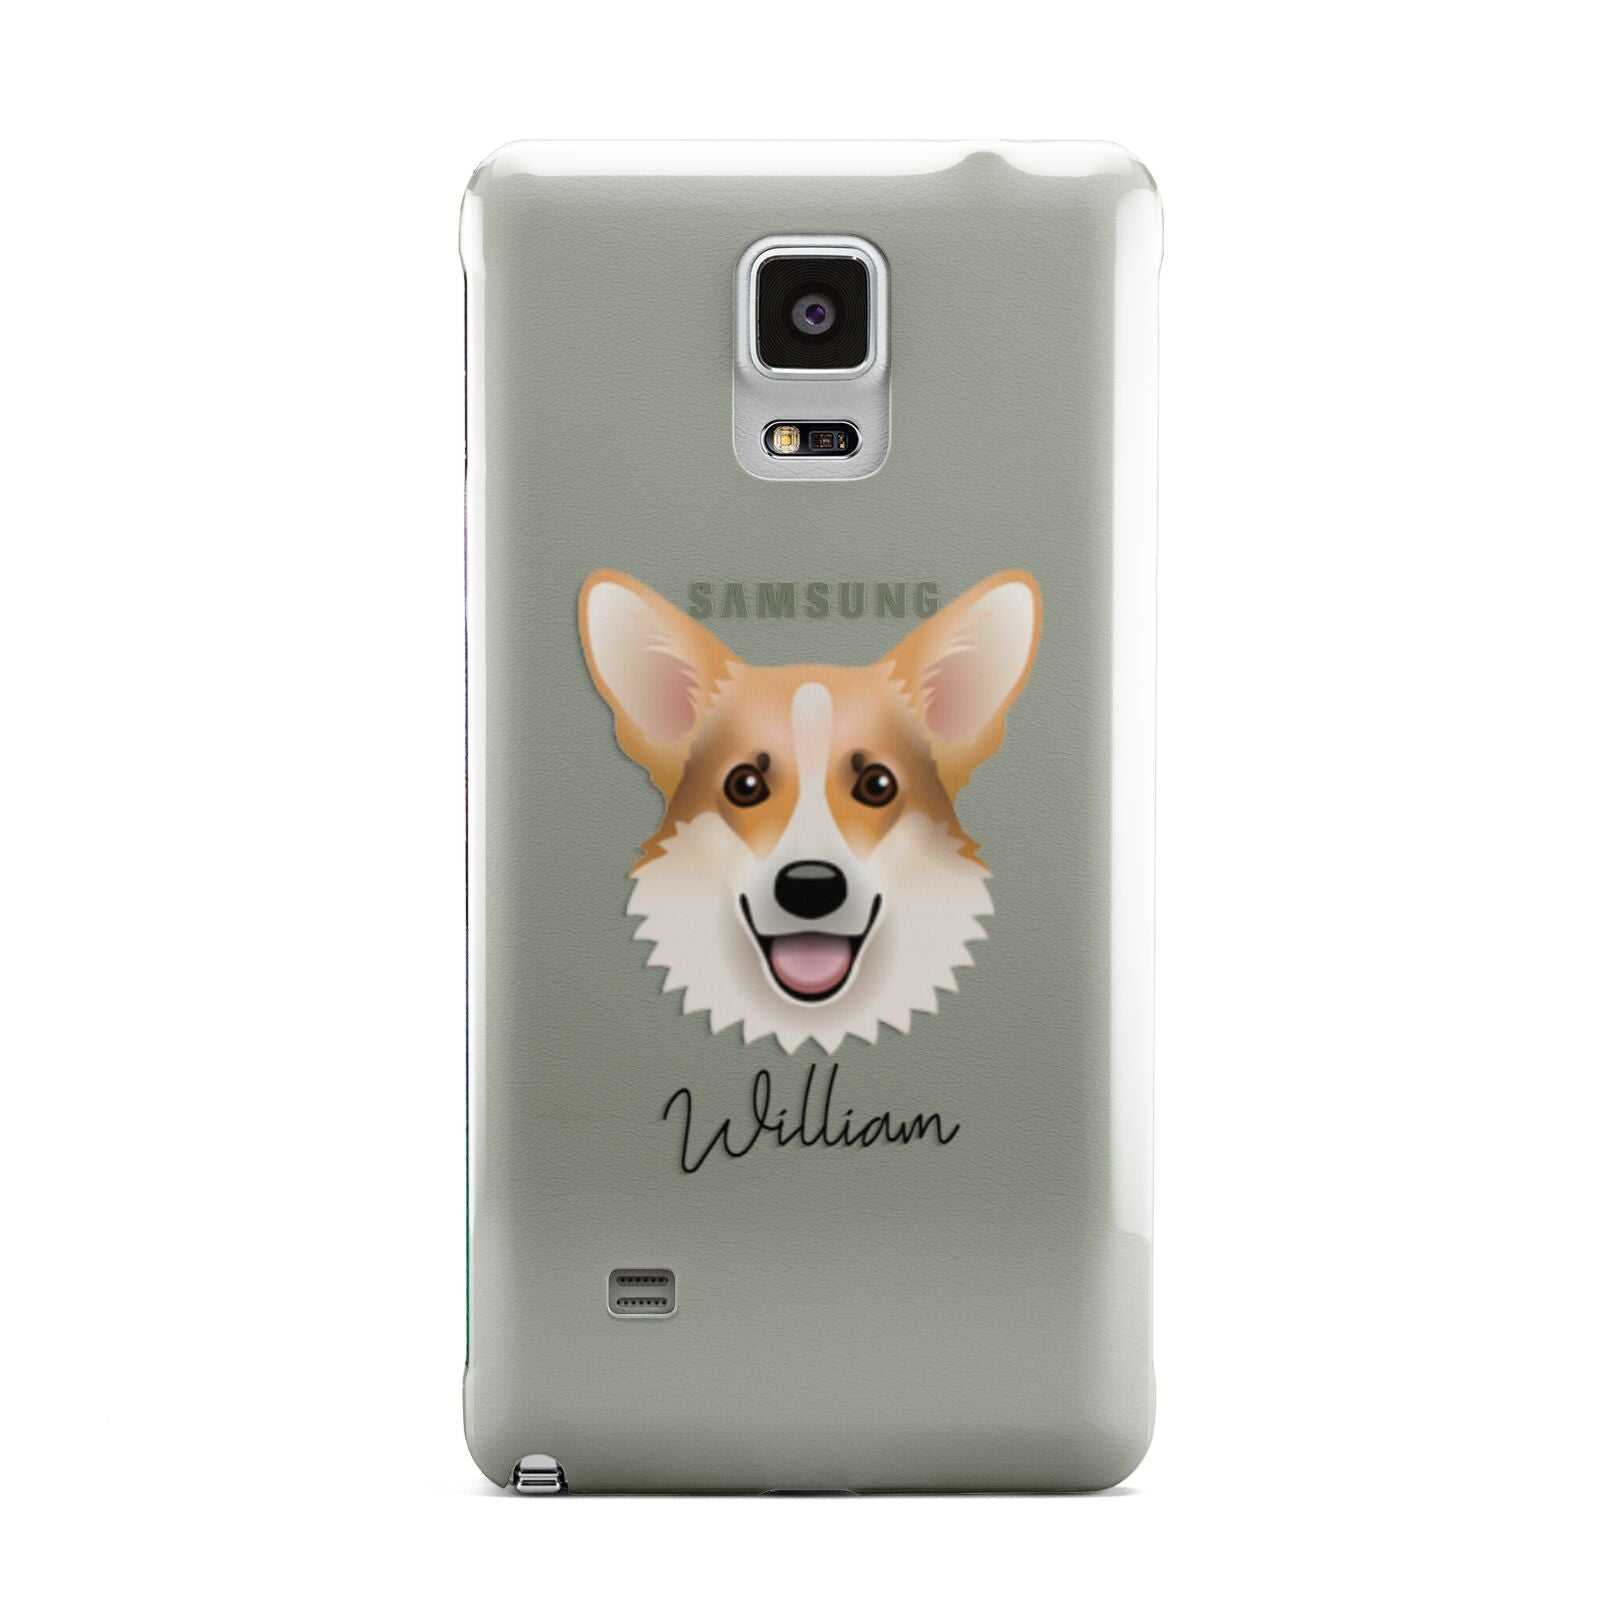 Corgi Personalised Samsung Galaxy Note 4 Case